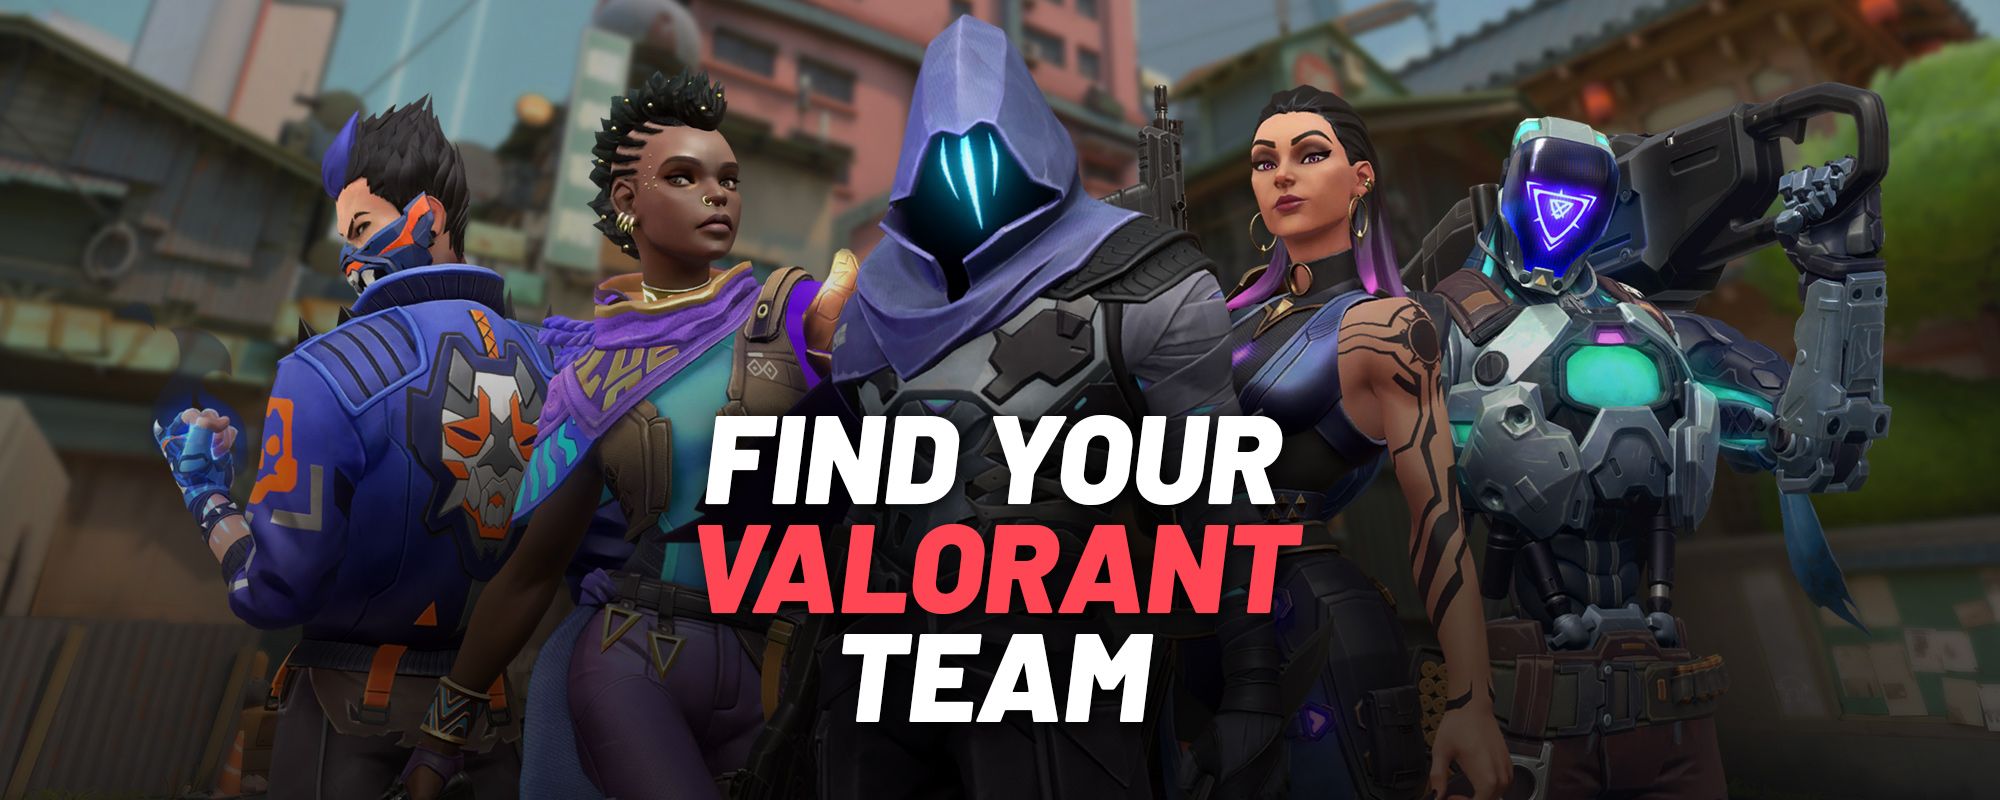 Find Your Valorant Team